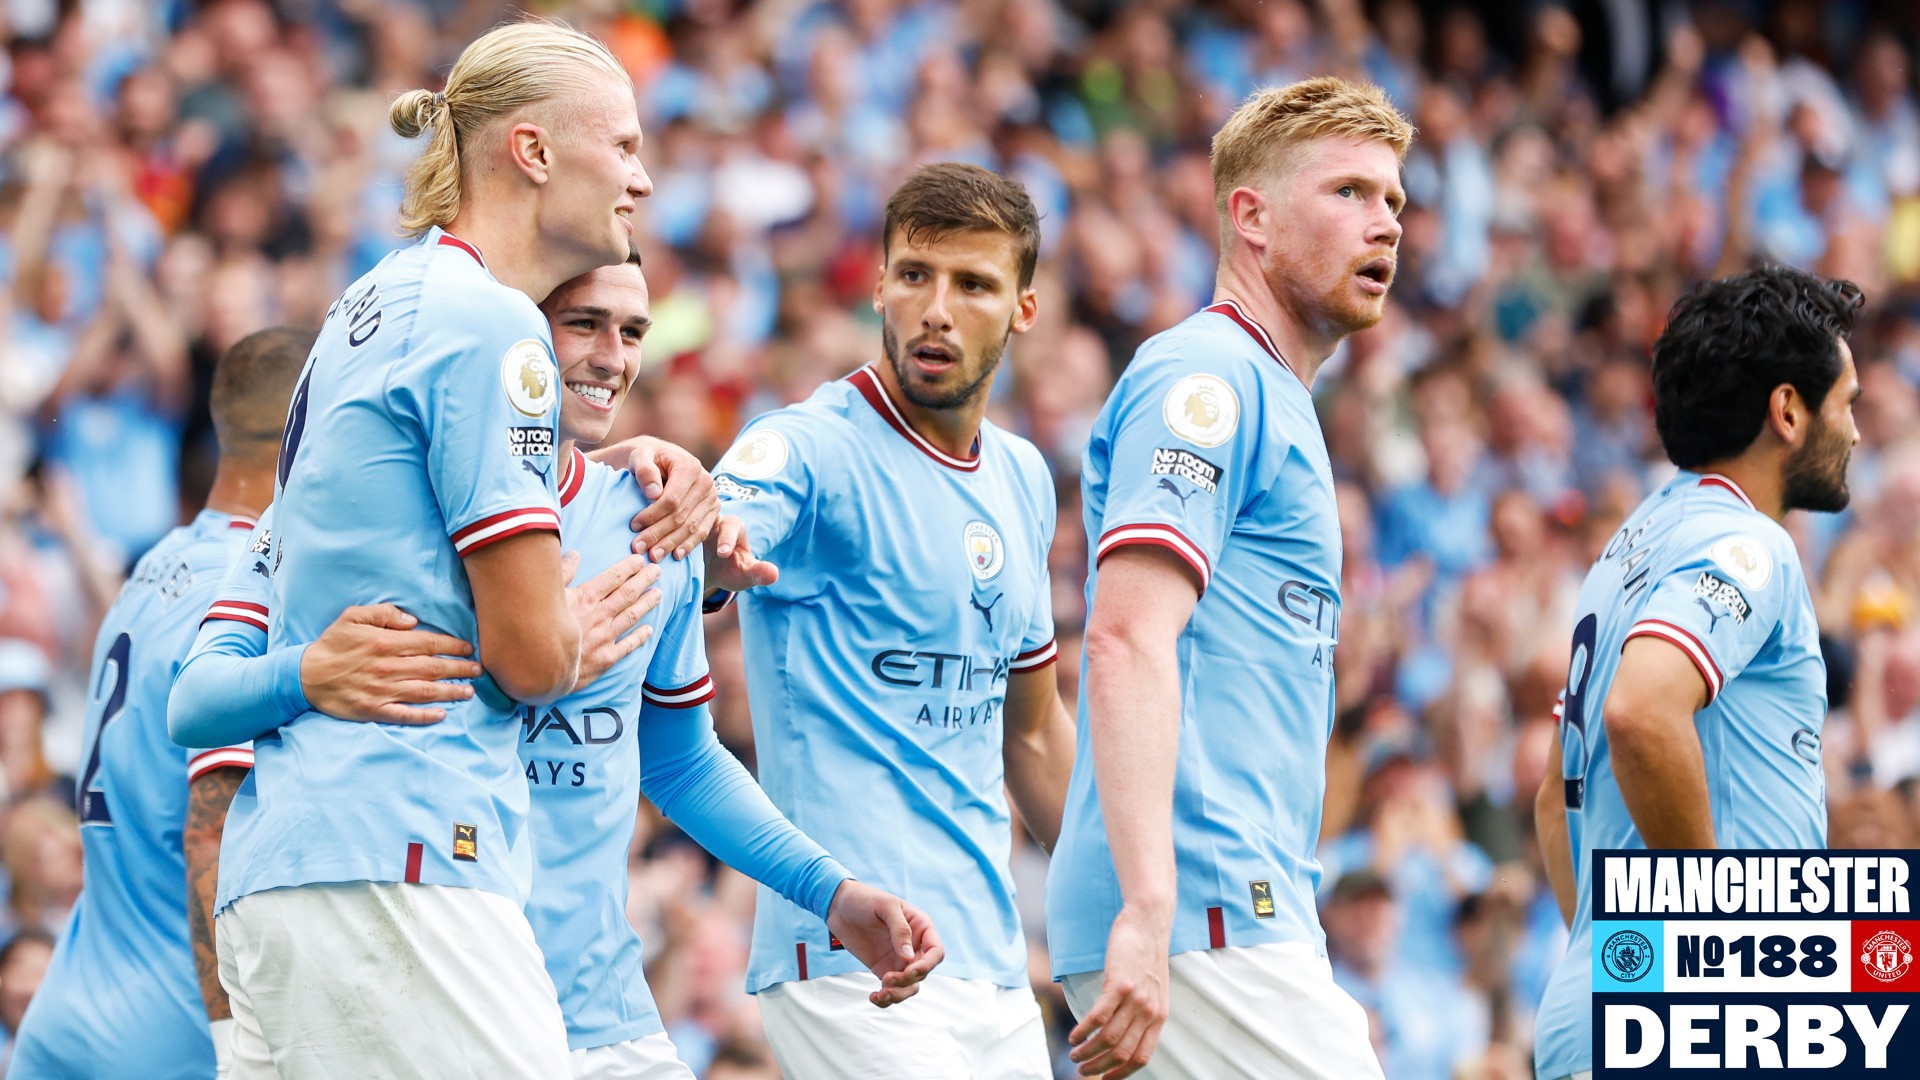 City v Manchester Kick-off time, TV info and team news